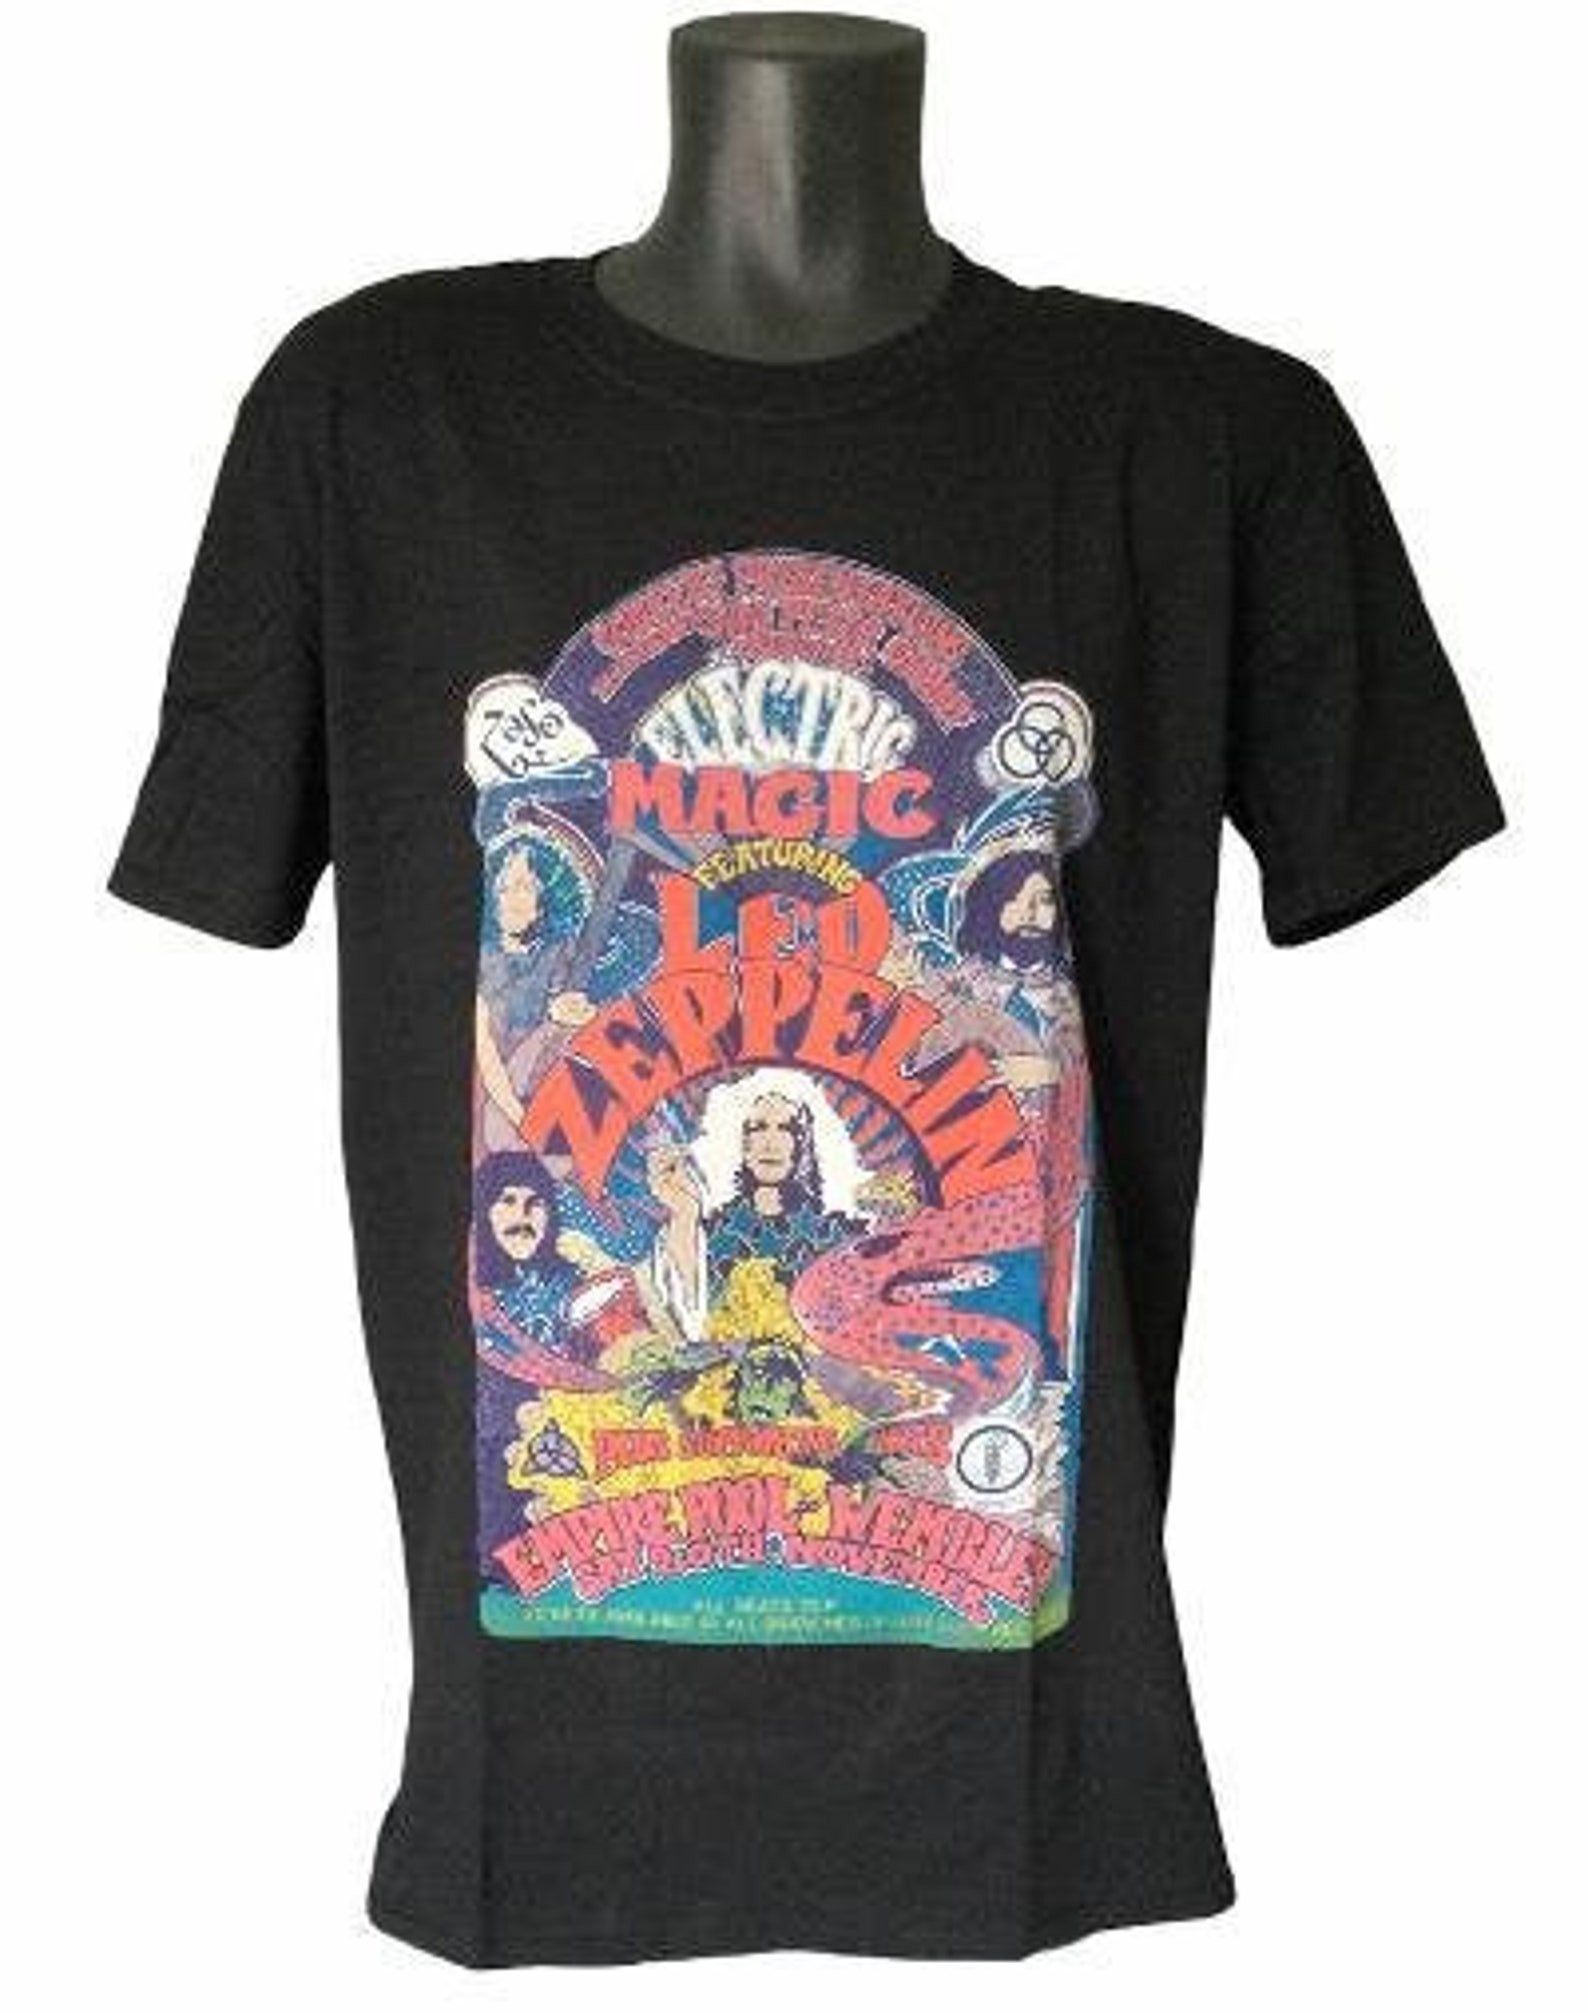 Led Zeppelin Unisex T Shirt: Full Colour Electric Magic | Etsy